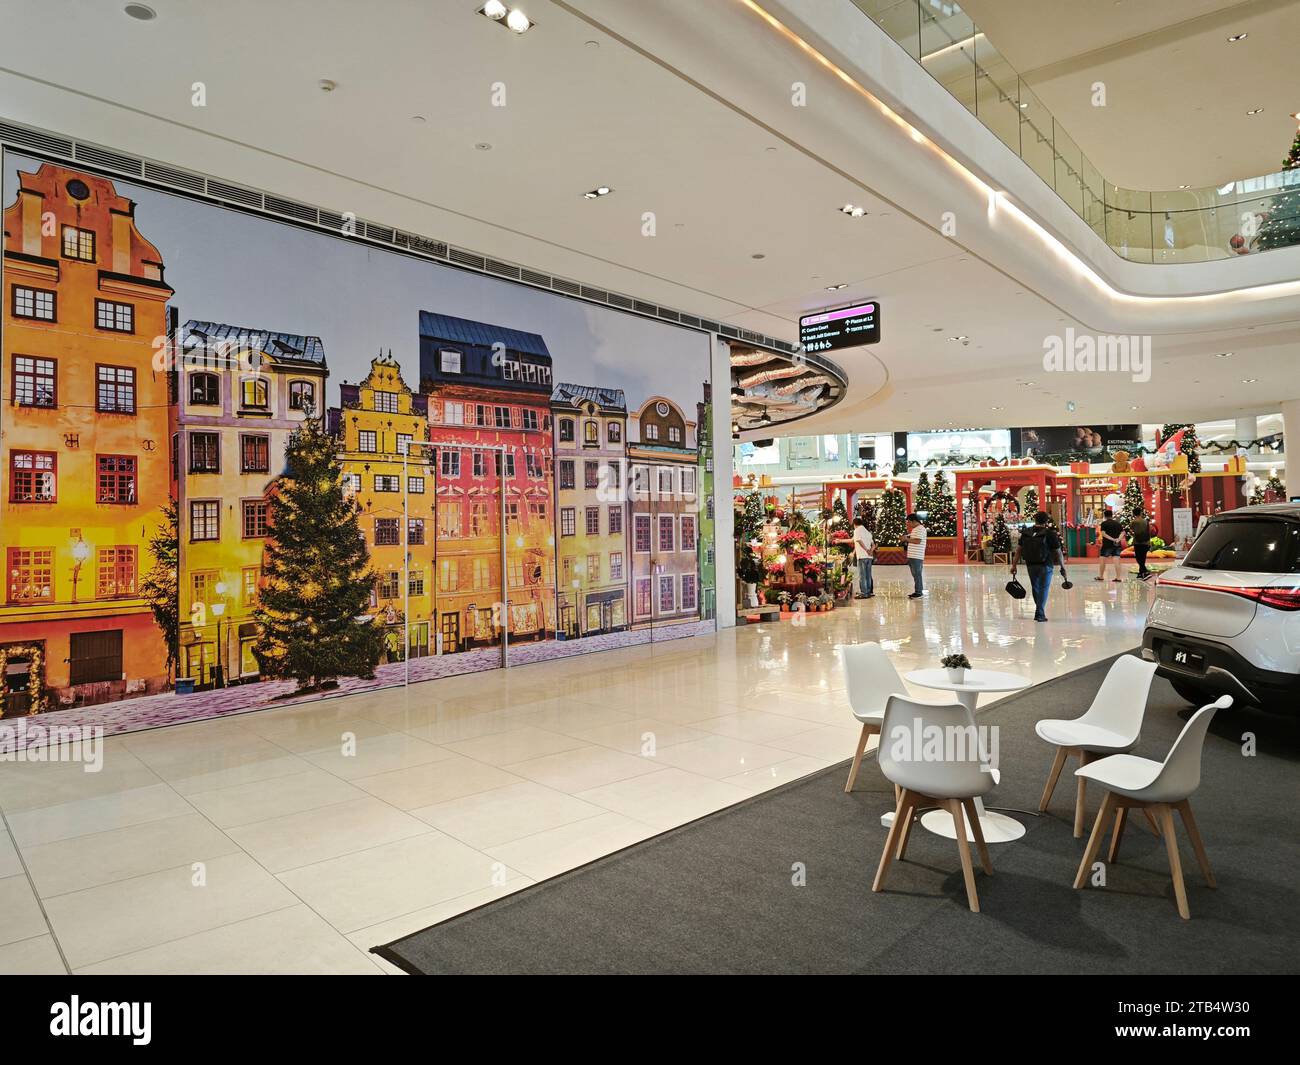 Beautiful decoration scene at the indoor entrance for the coming Christmas celebration at Pavilion Mall, Bukit Jalil, Kuala Lumpur,Malaysia. Stock Photo